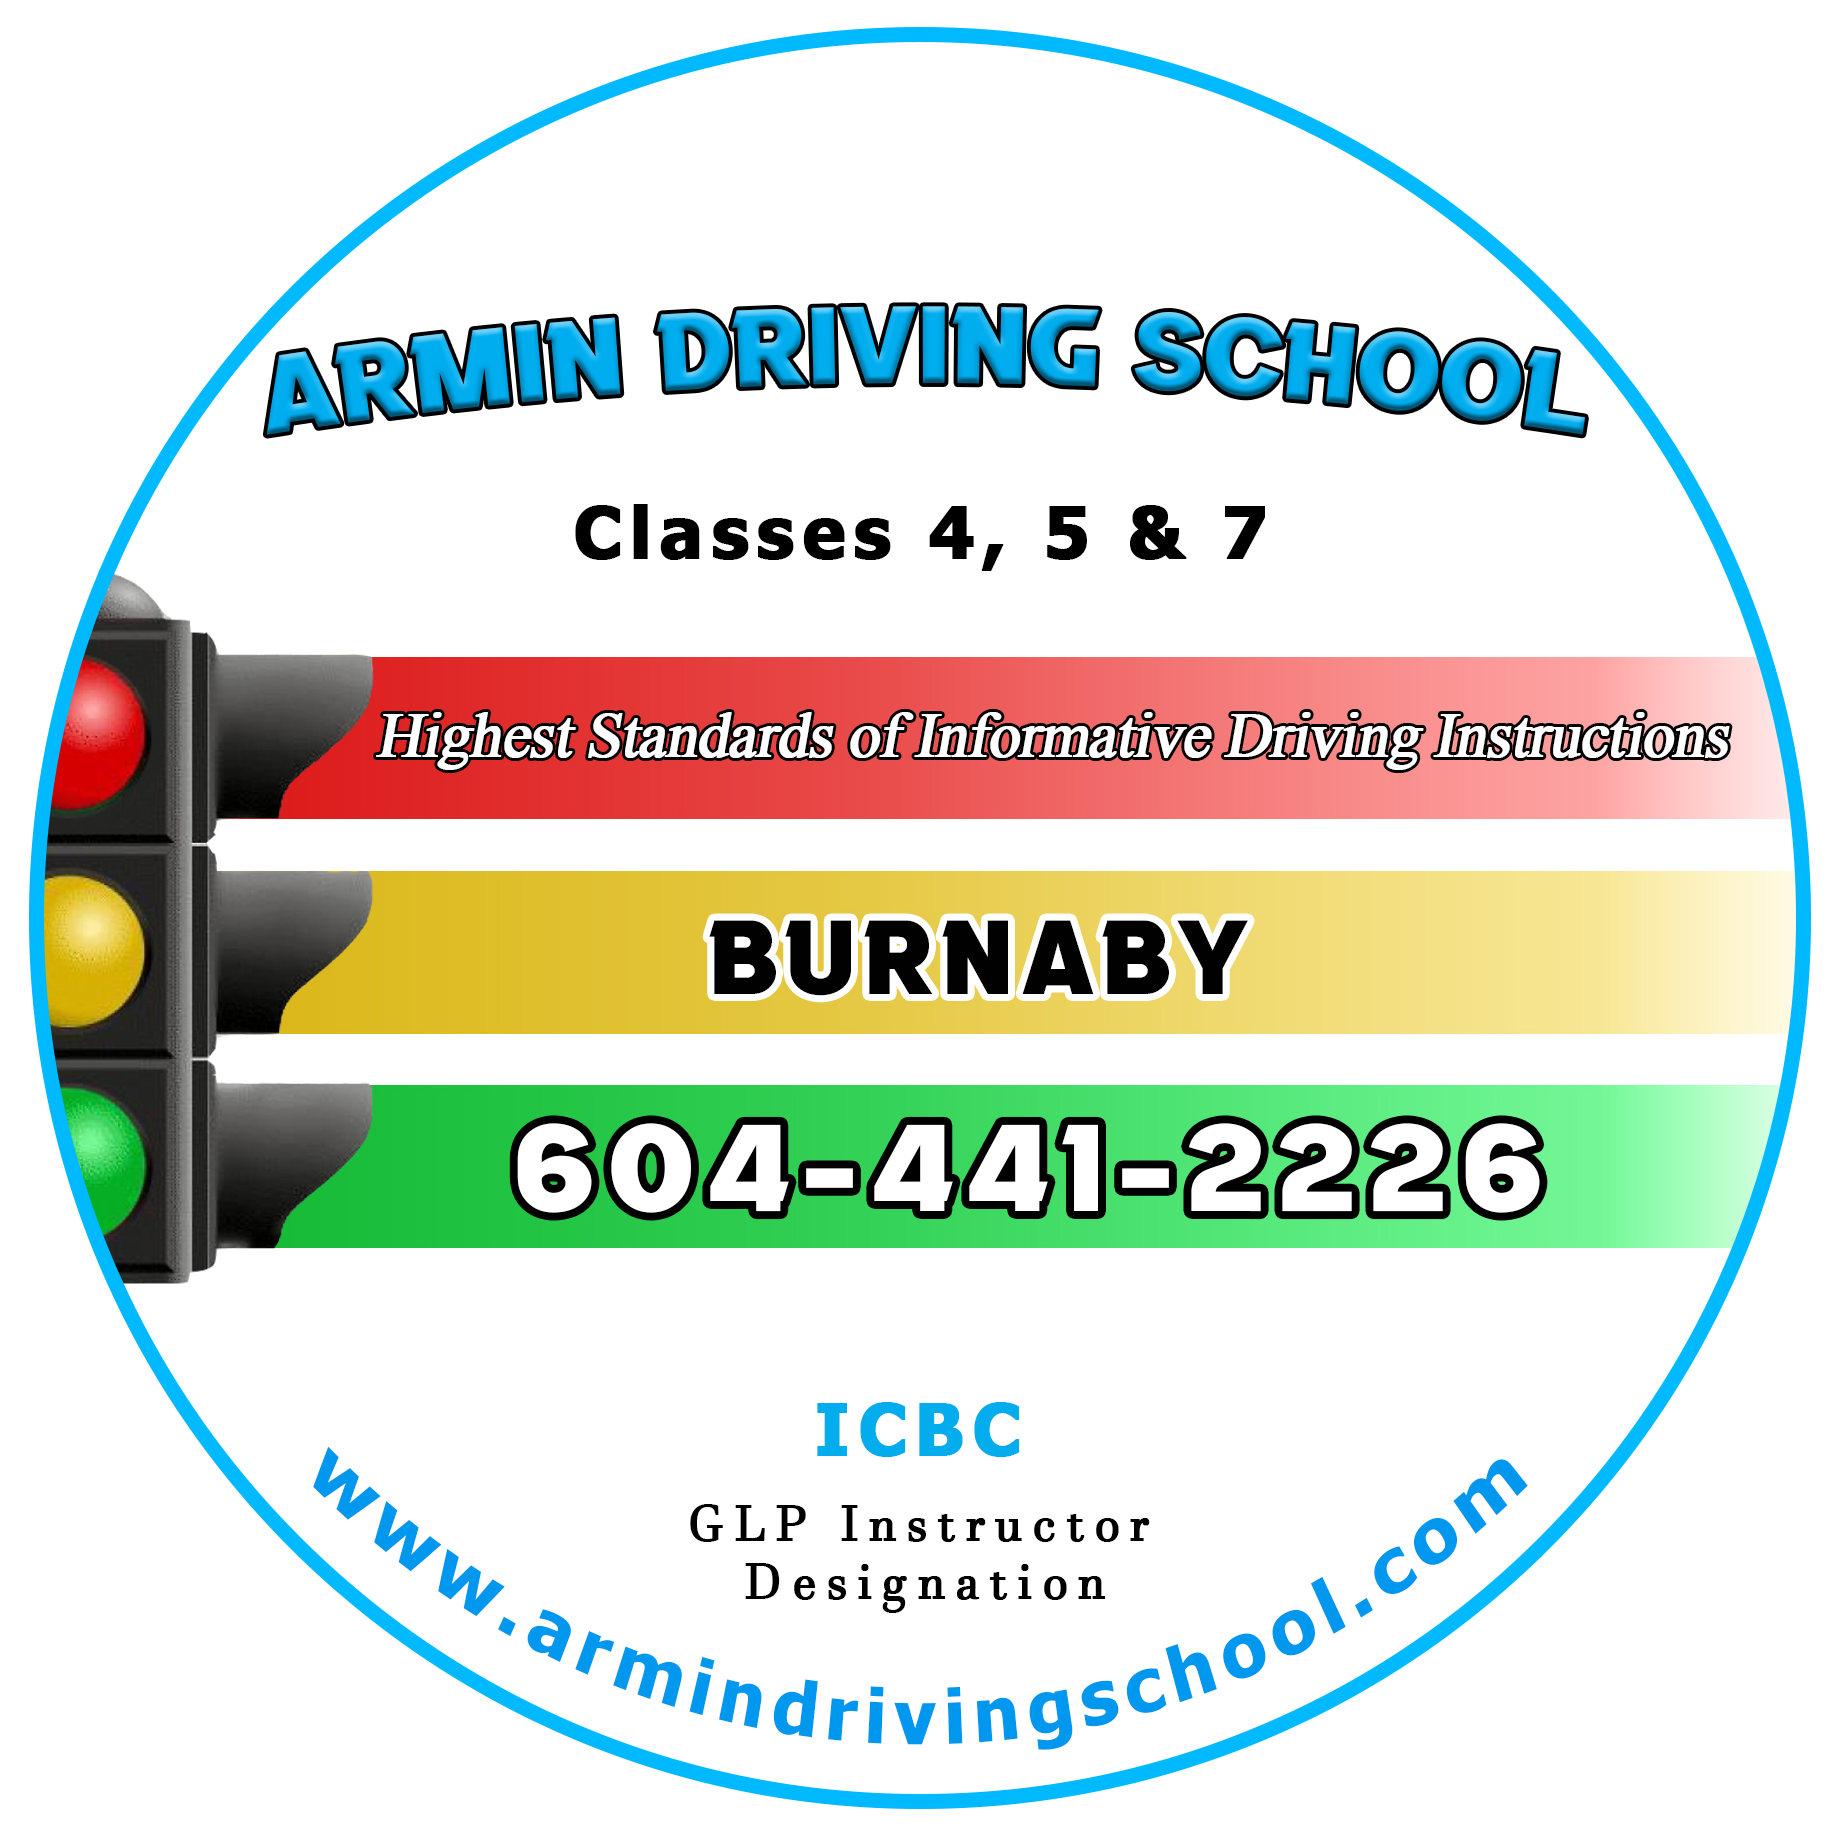 Armin Driving School